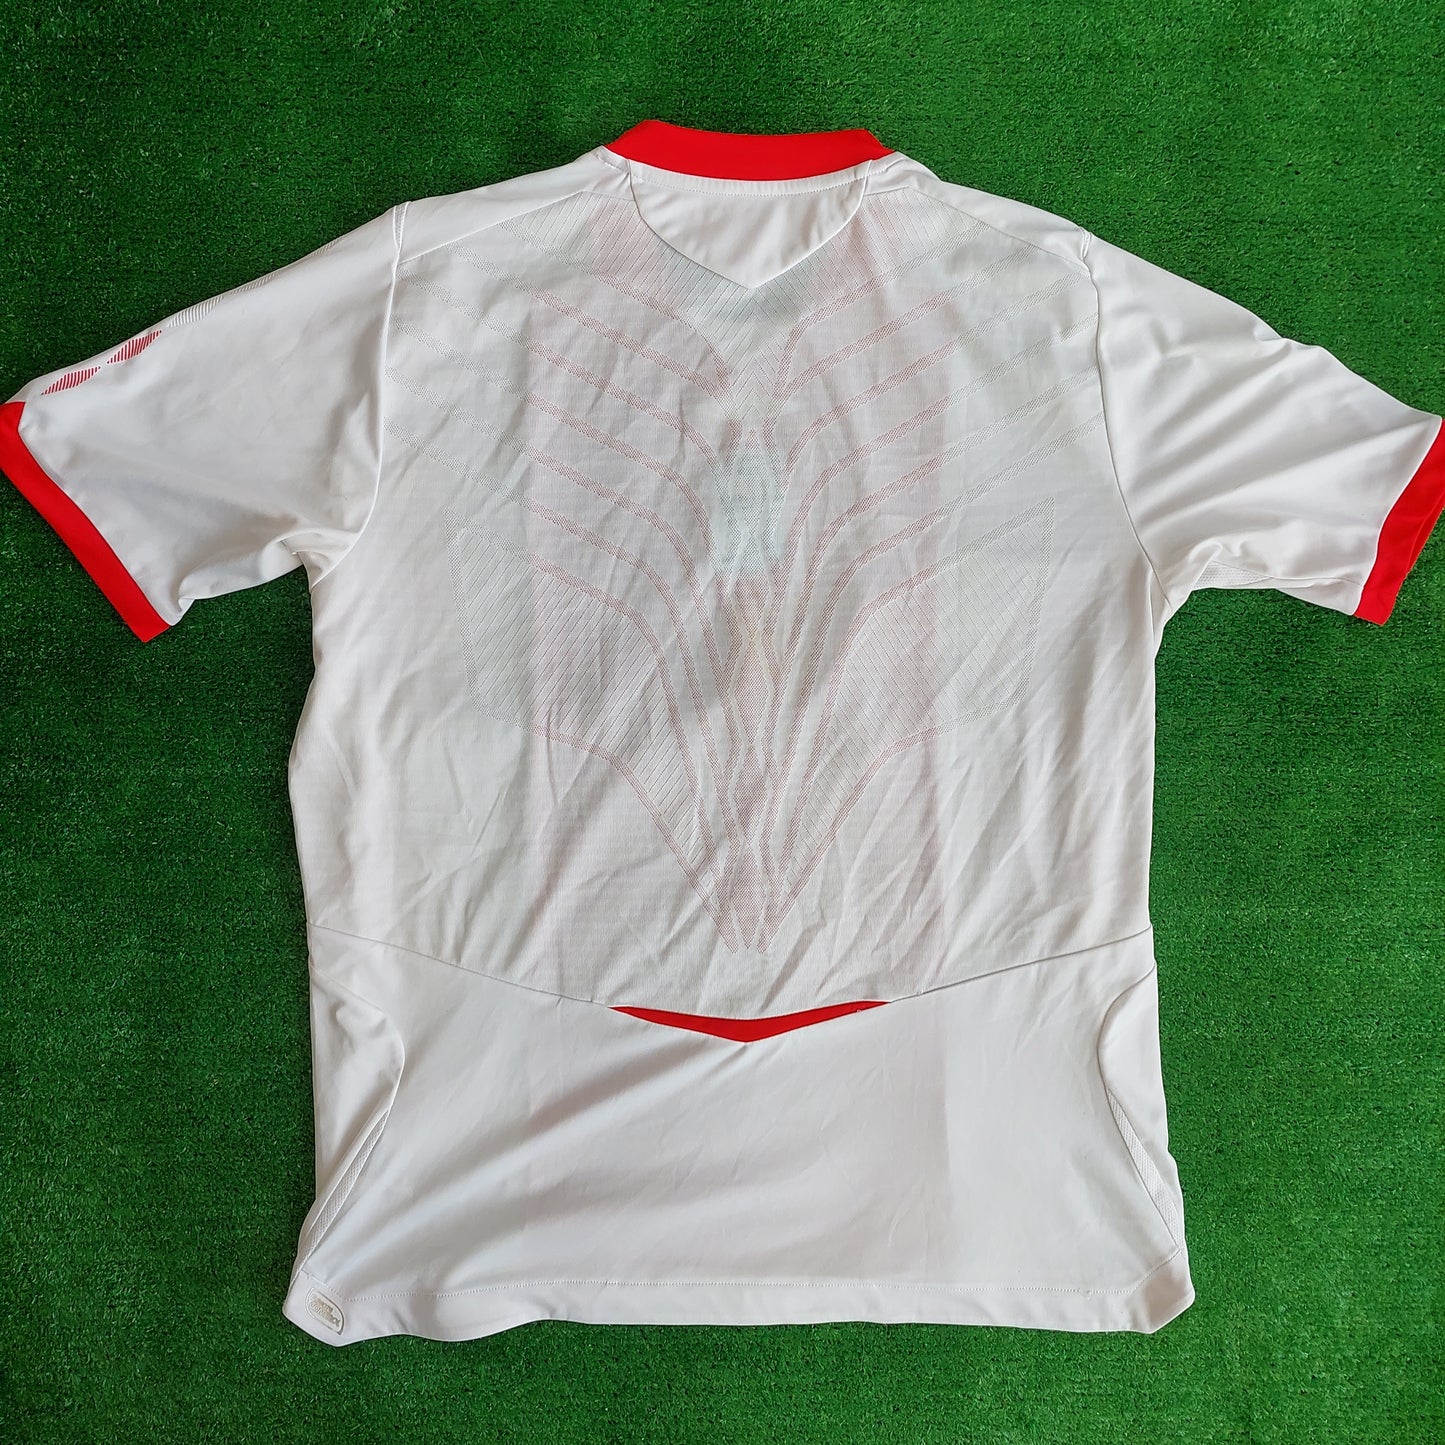 Birmingham City 2008/09 Away Shirt (Very Good) - Size XL